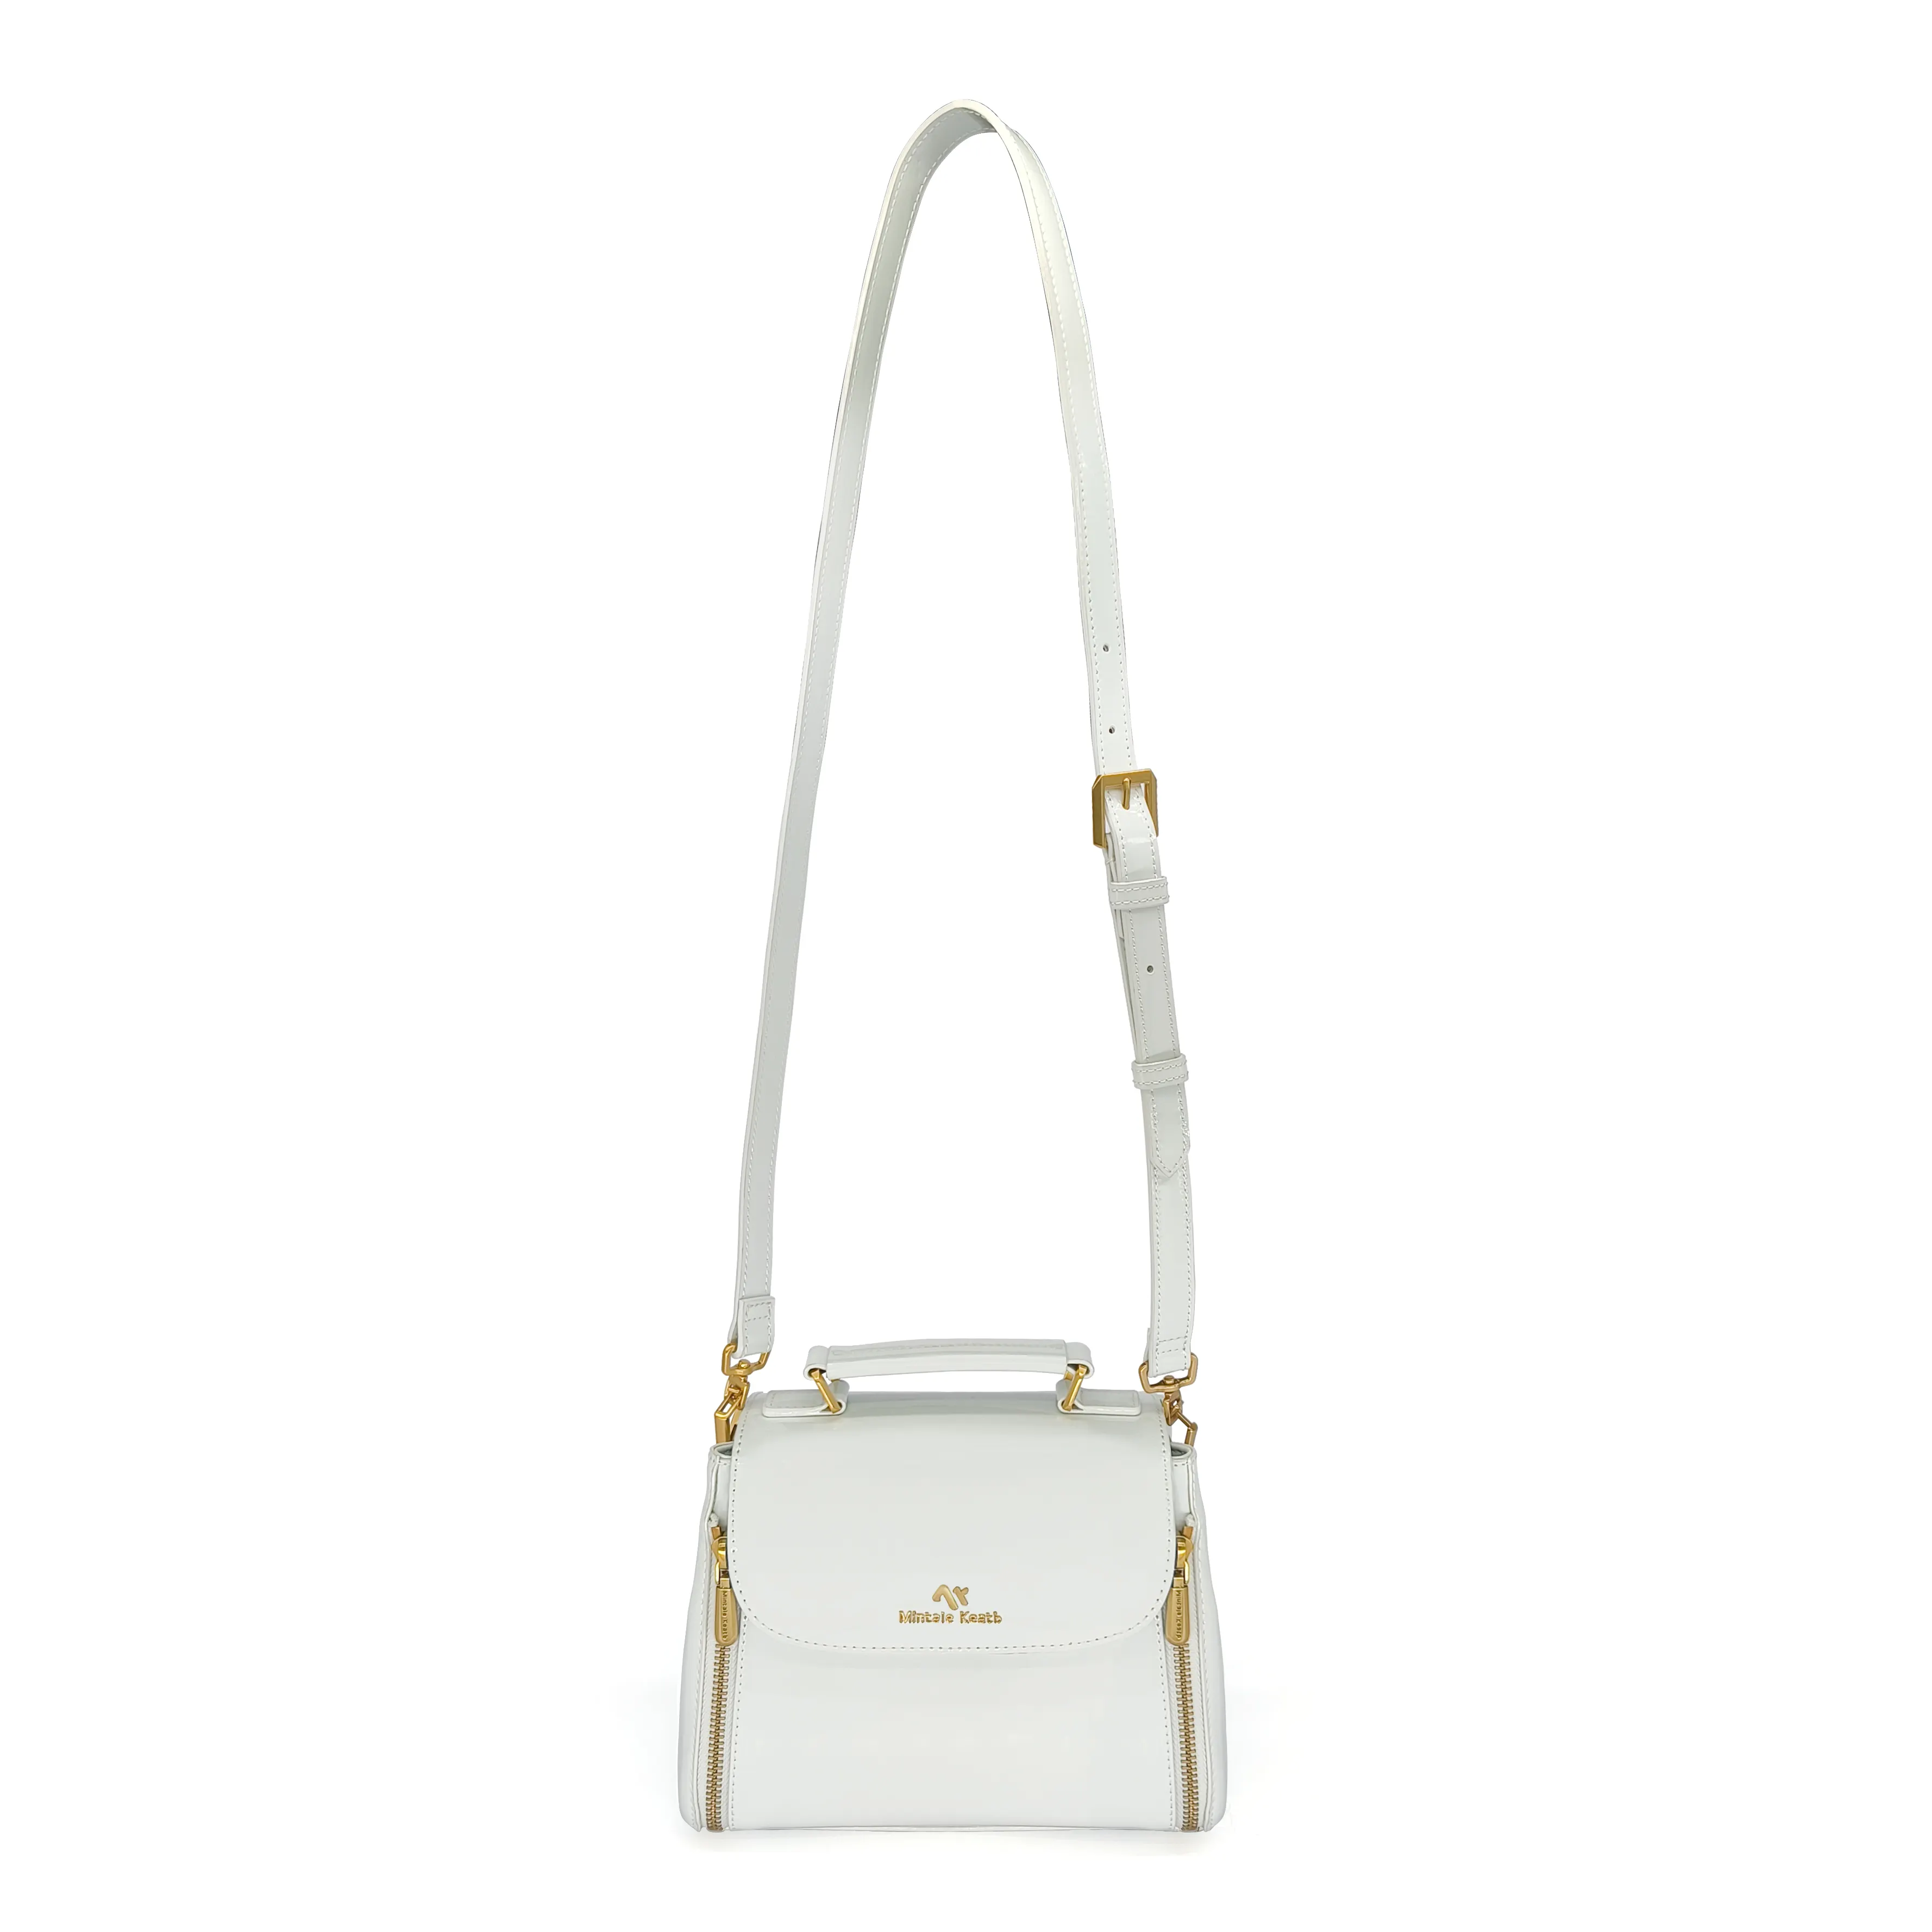 China supplier customized high quality women's handbags fashion minimalist shoulder bag for woman casual luxury crossbody bag